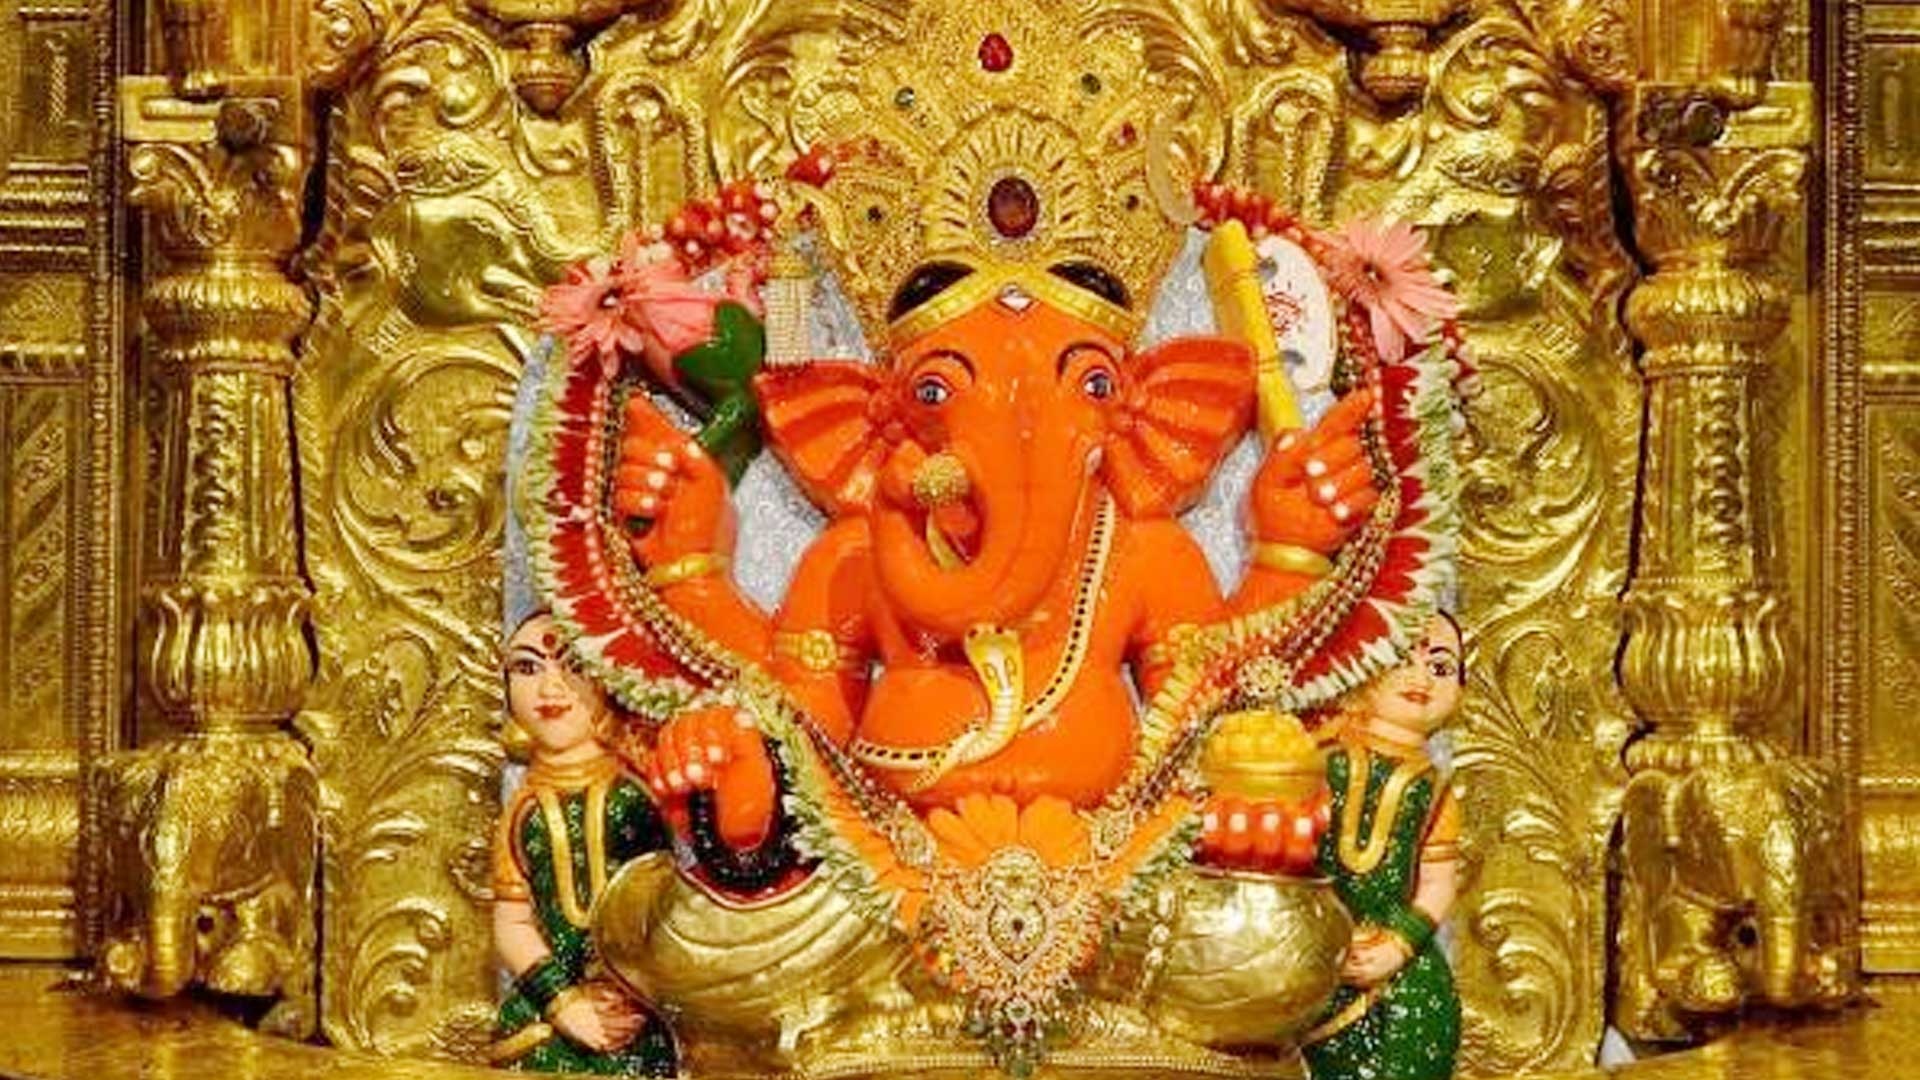 Ganpati Bappa Morya - Siddhivinayak